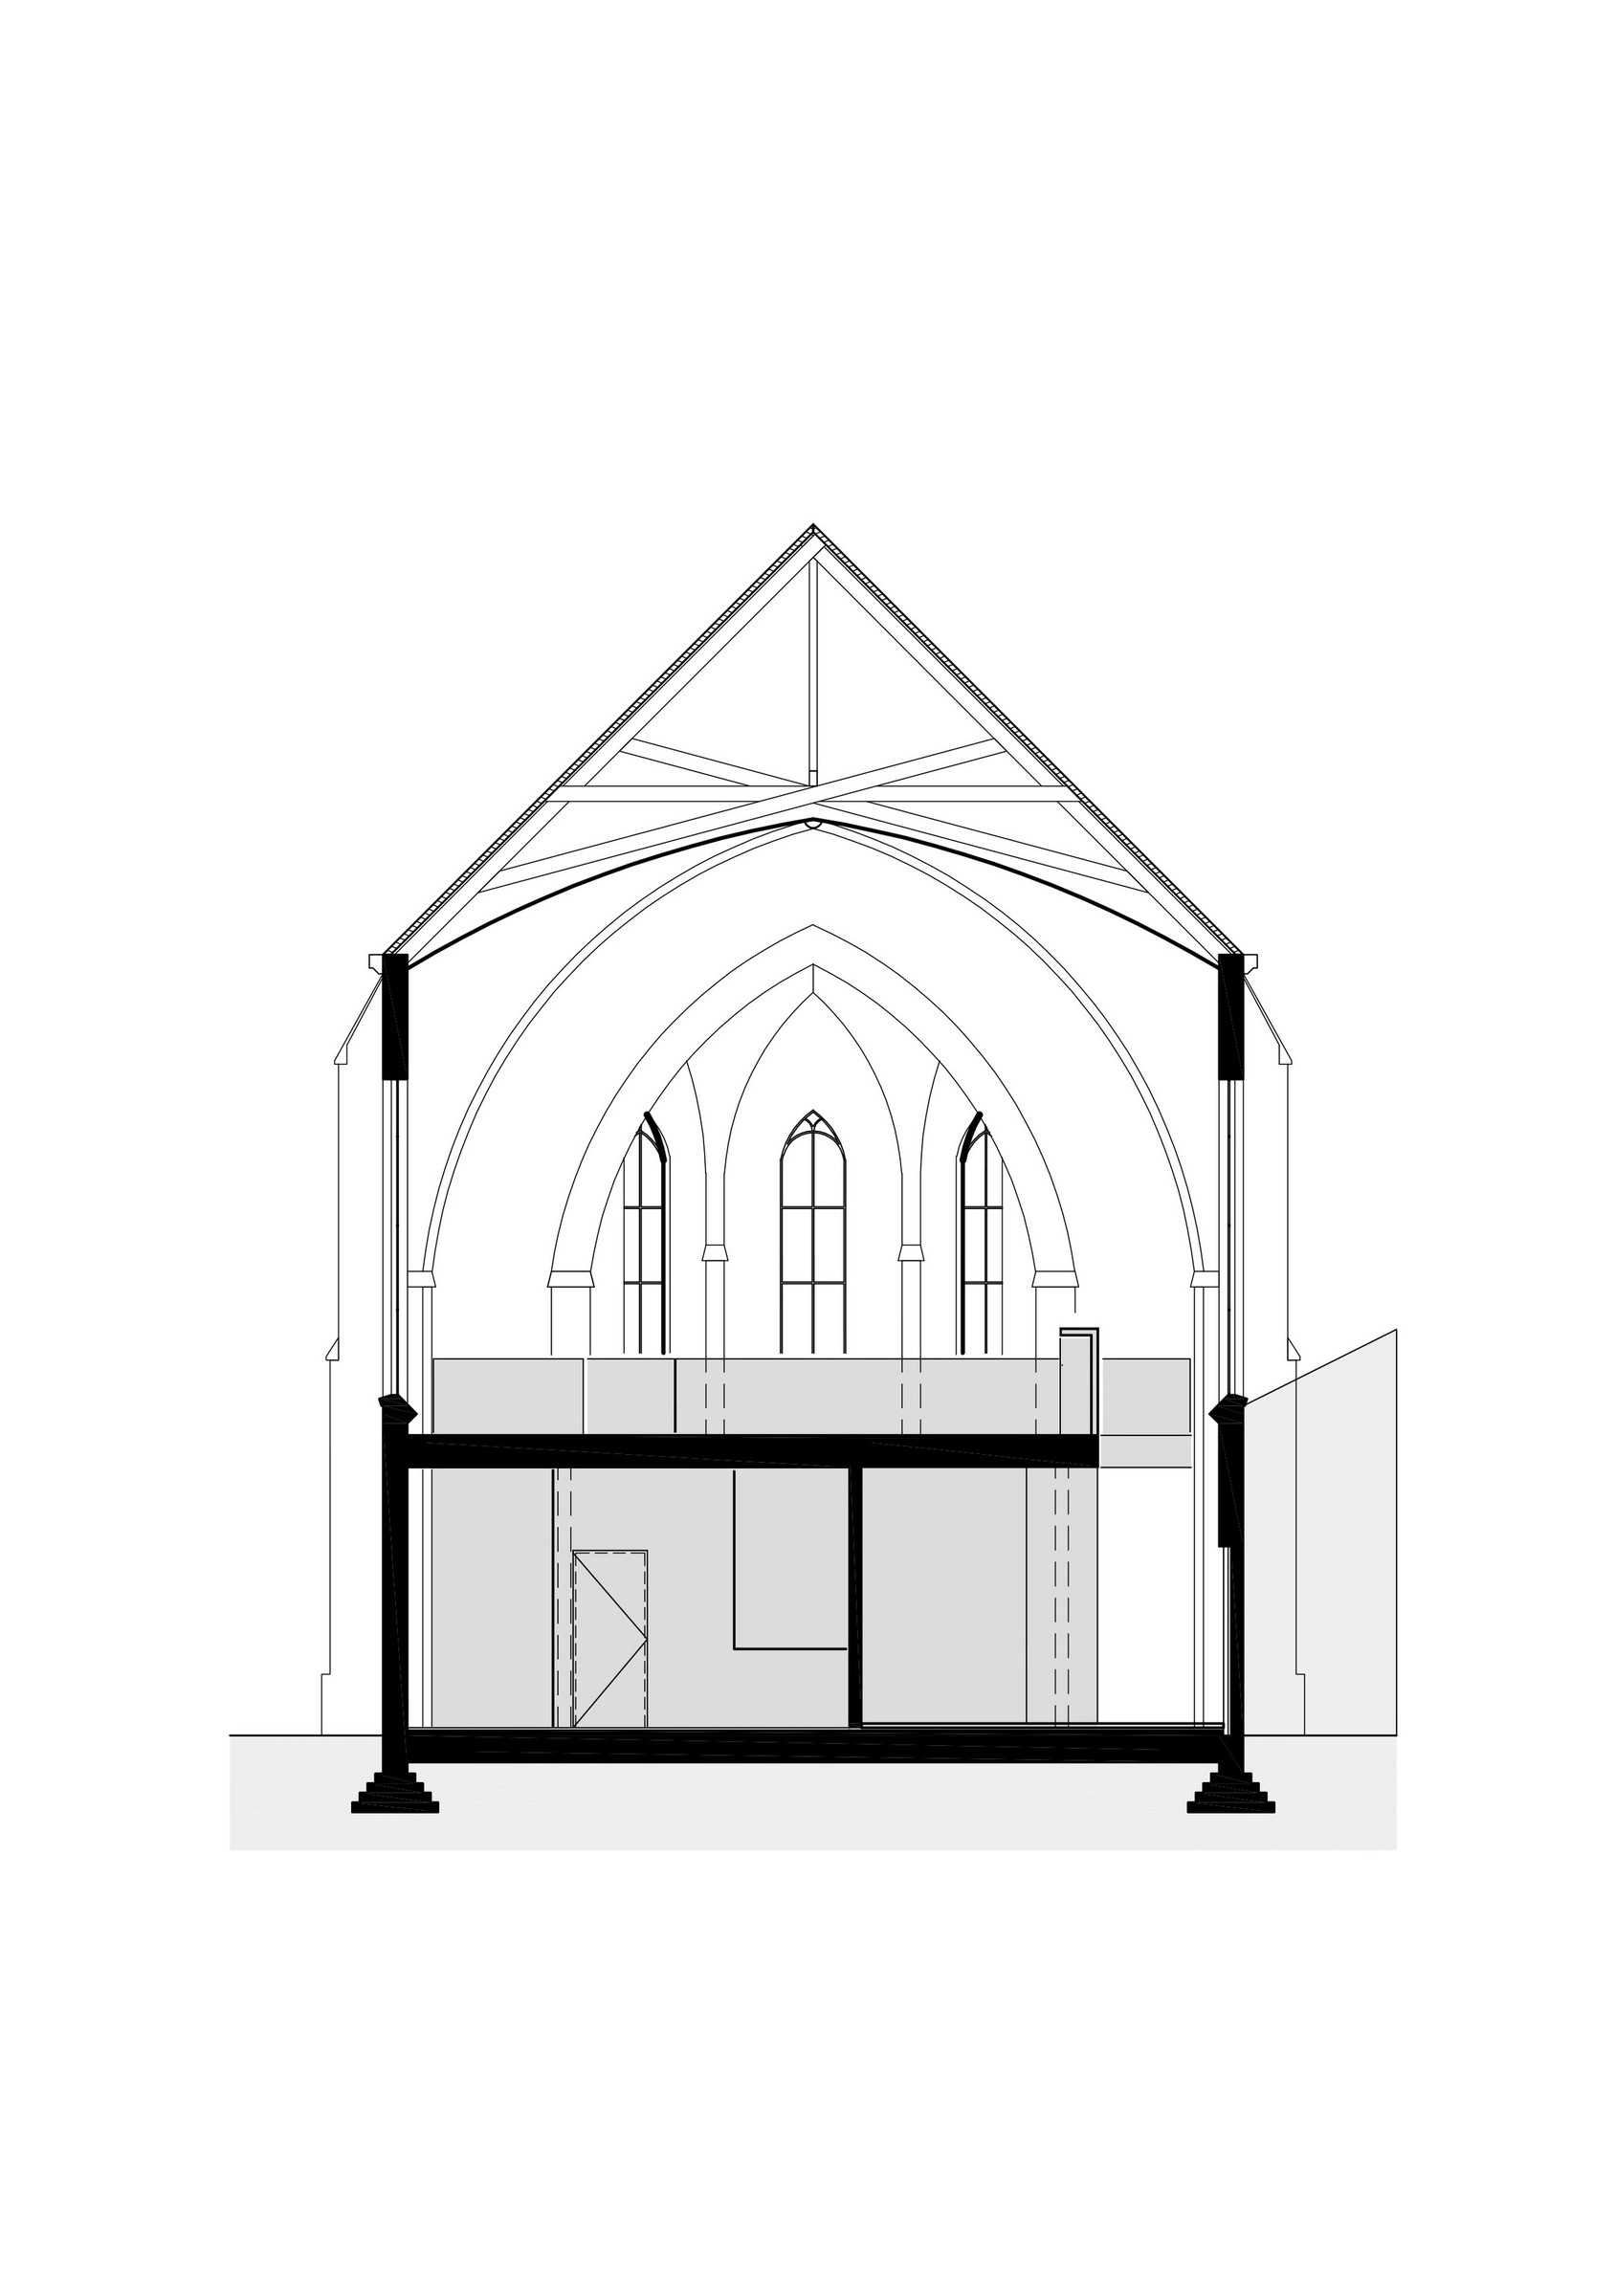 Zecc_Architecten-transformation-church-house-office.jpg